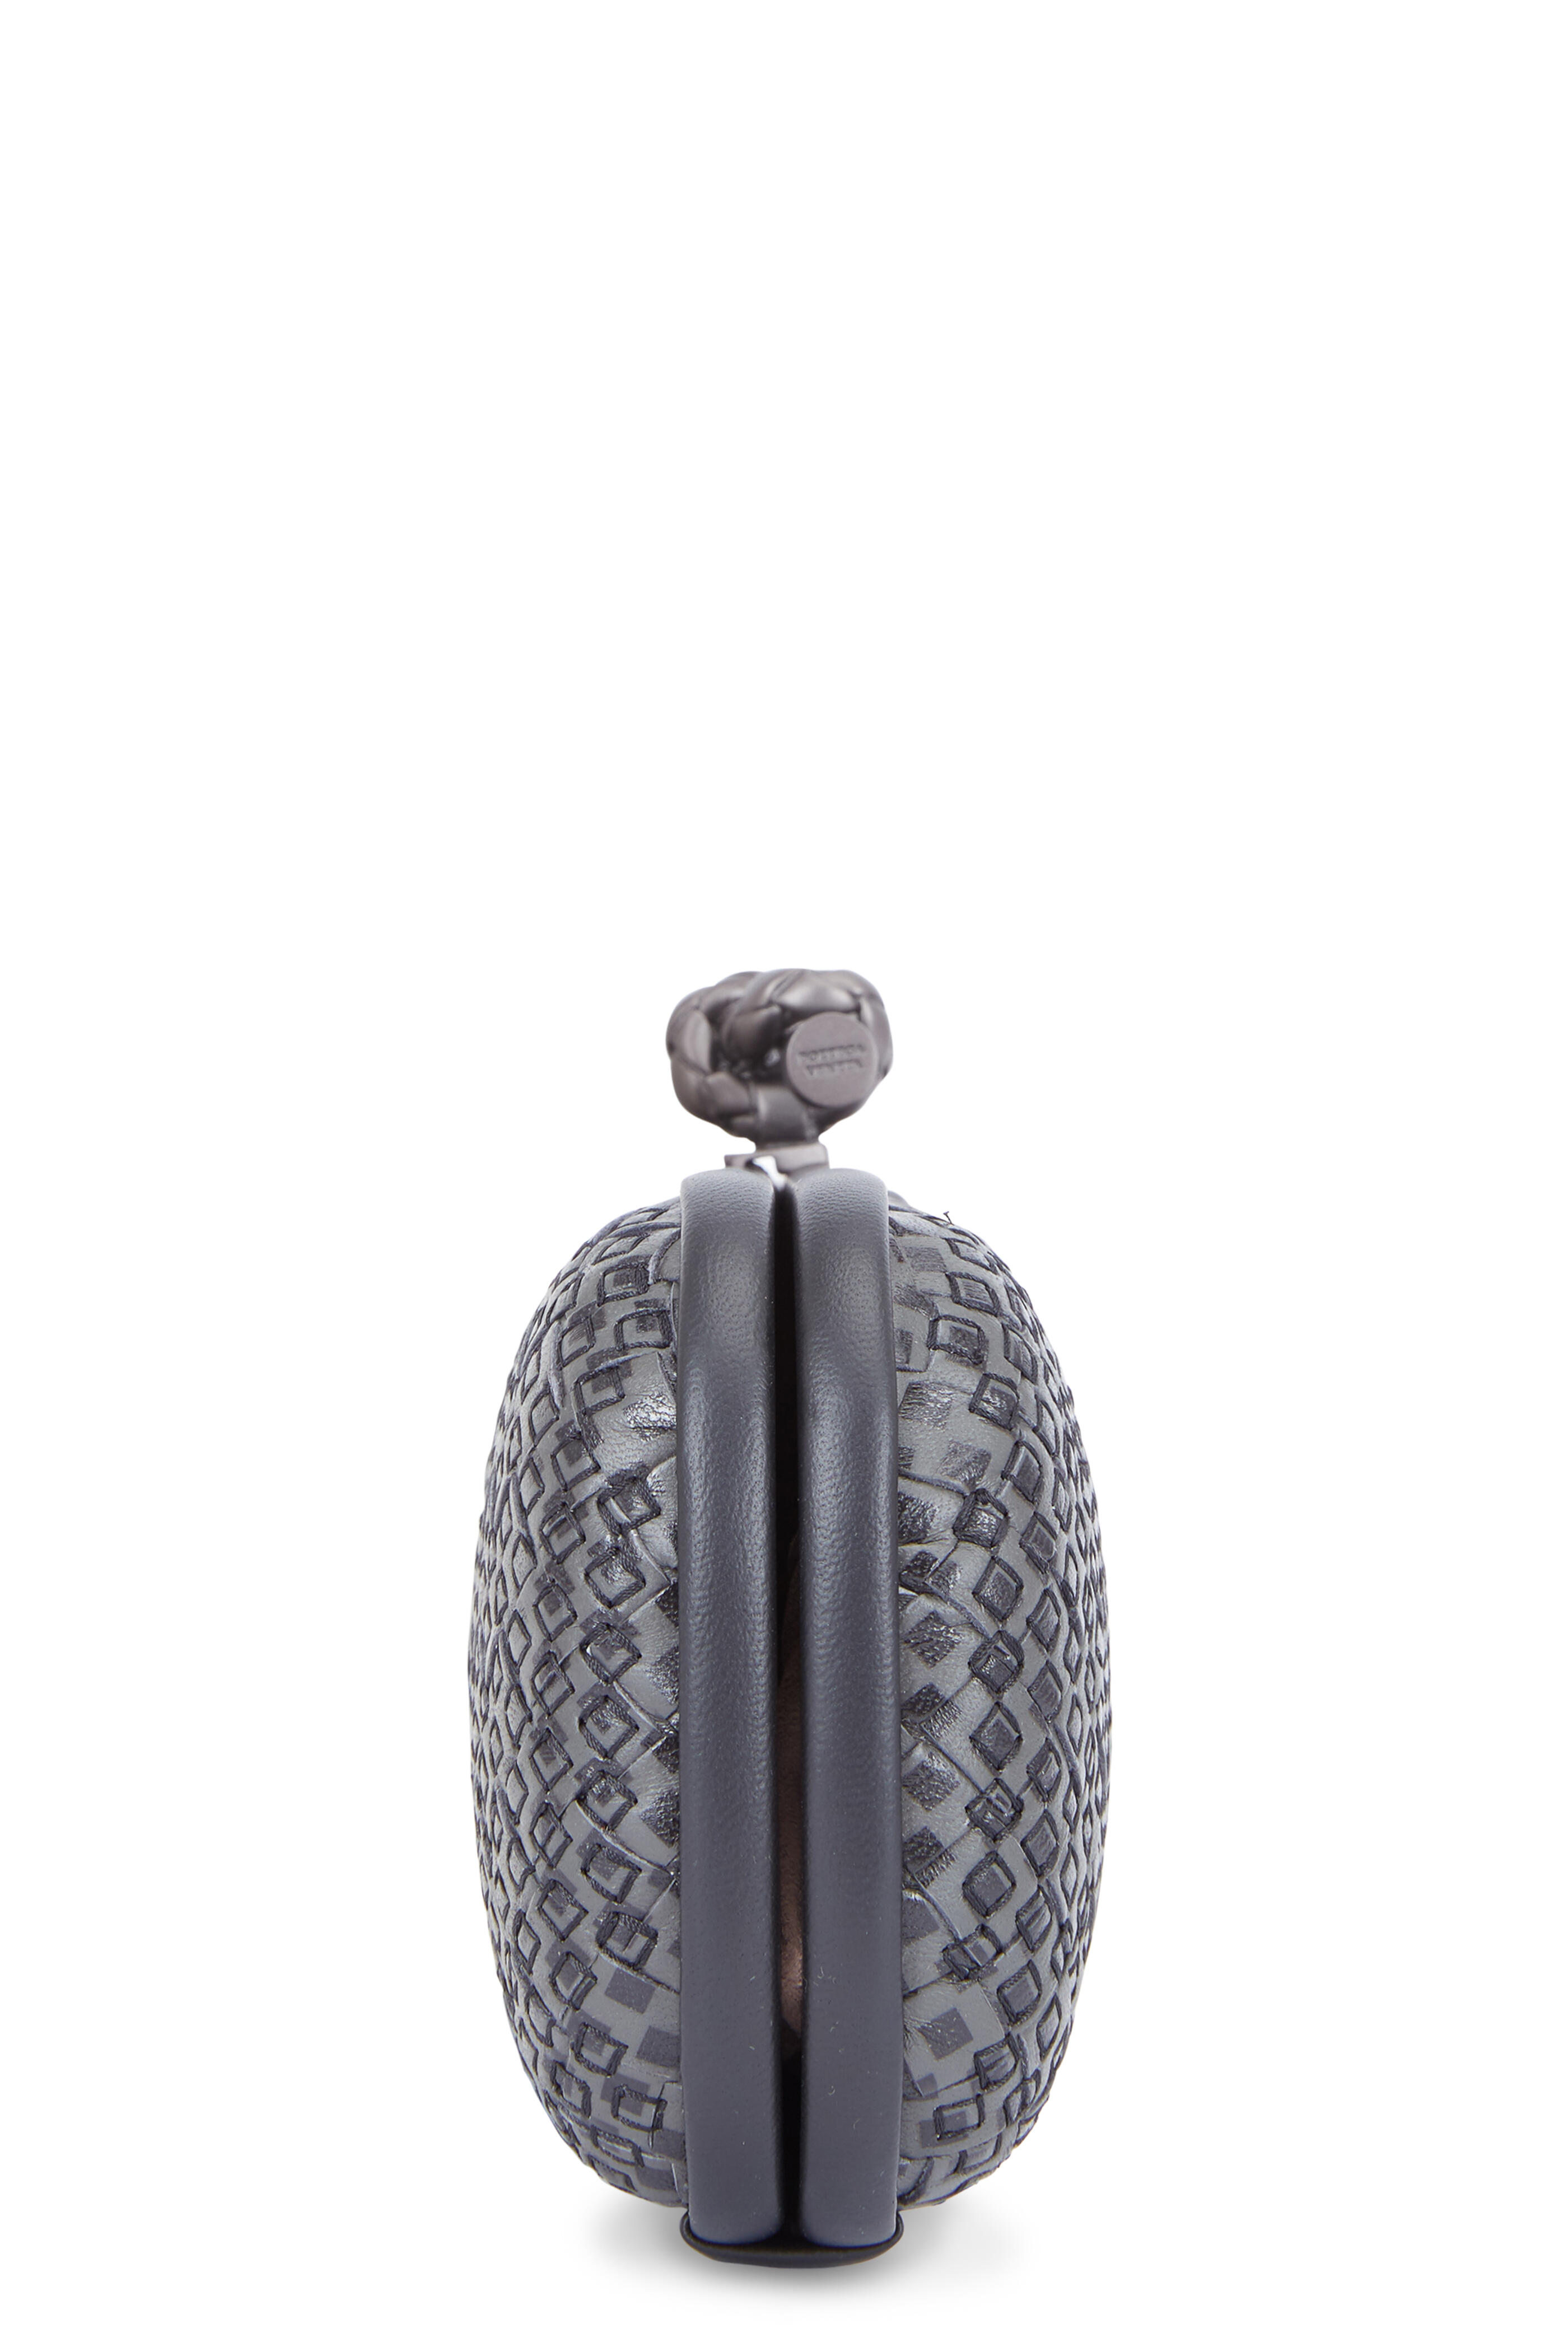 Bottega Veneta Knot Minaudiere Small Clutch Bag in Gray